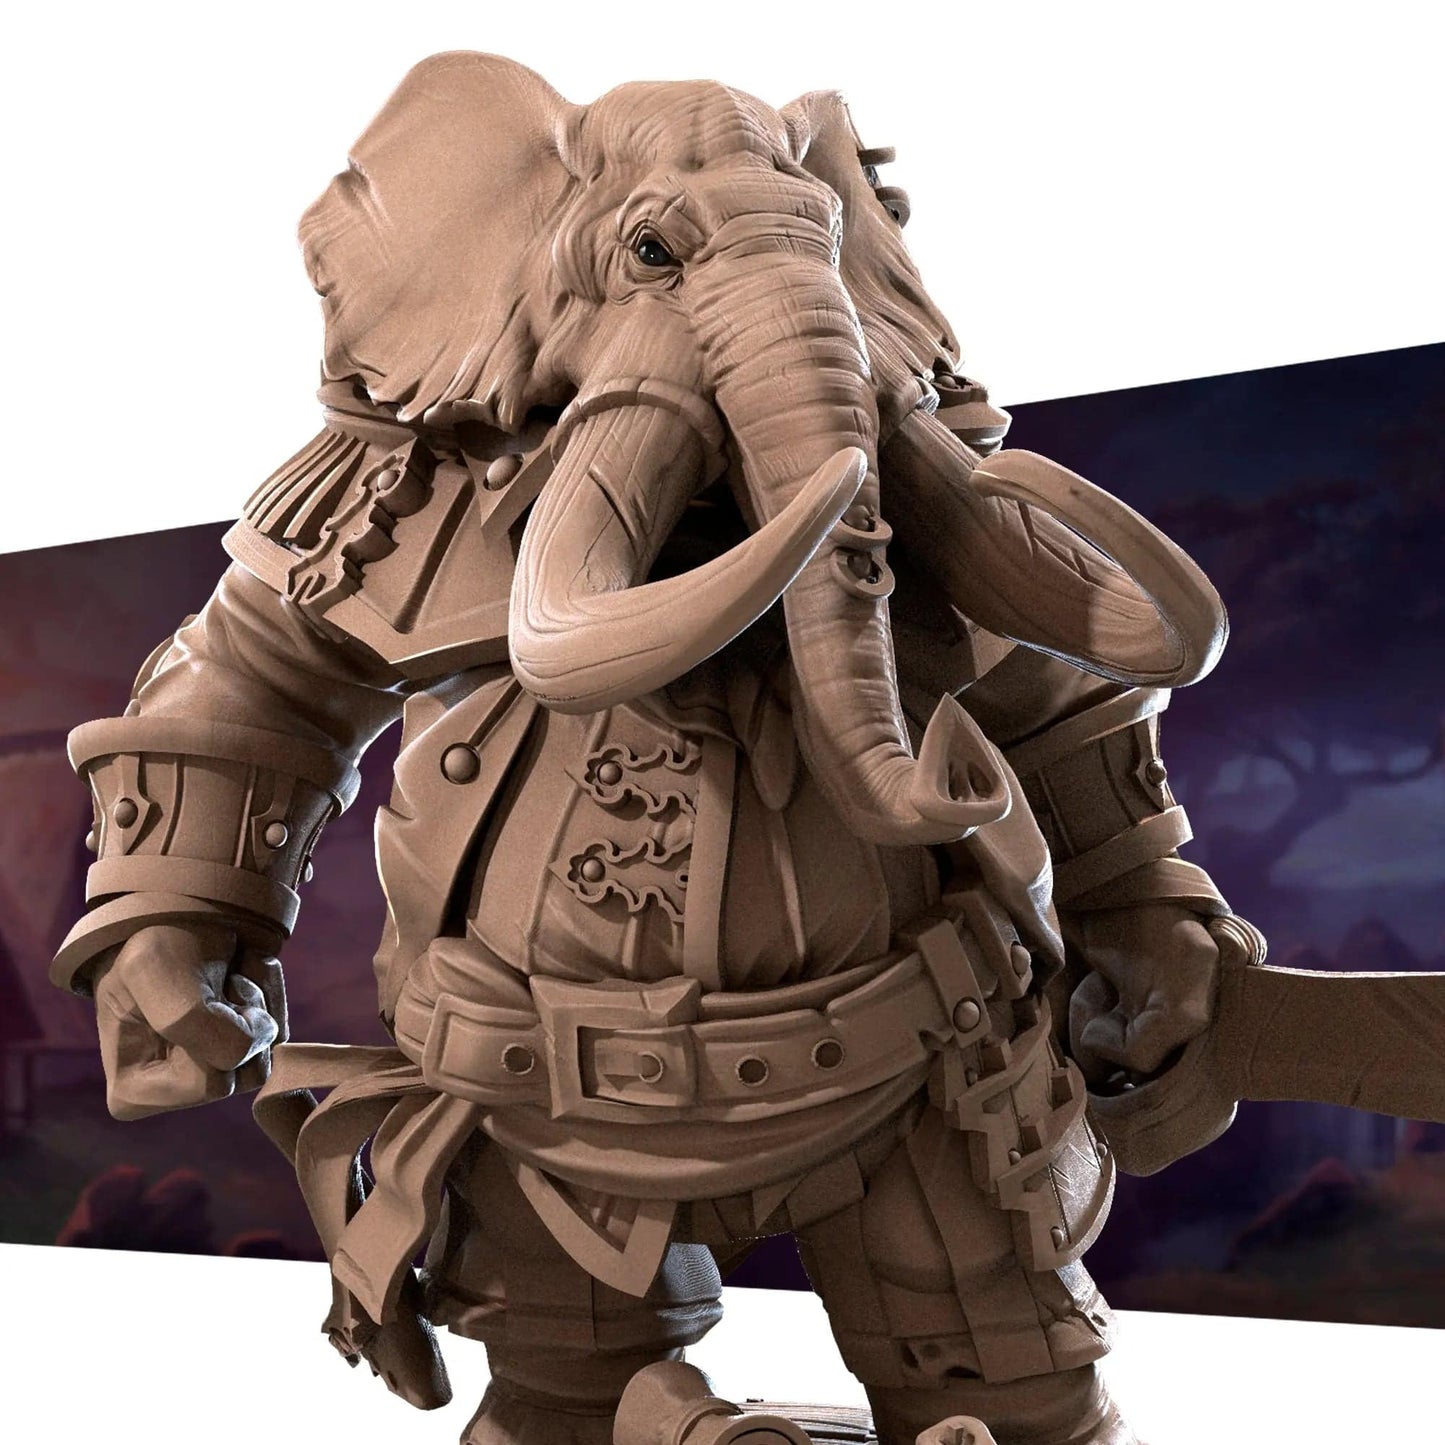 Zunebo Newgate, Commander Loxodon Elephantfolk | D&D Miniature TTRPG Character | Bite the Bullet - Tattles Told 3D